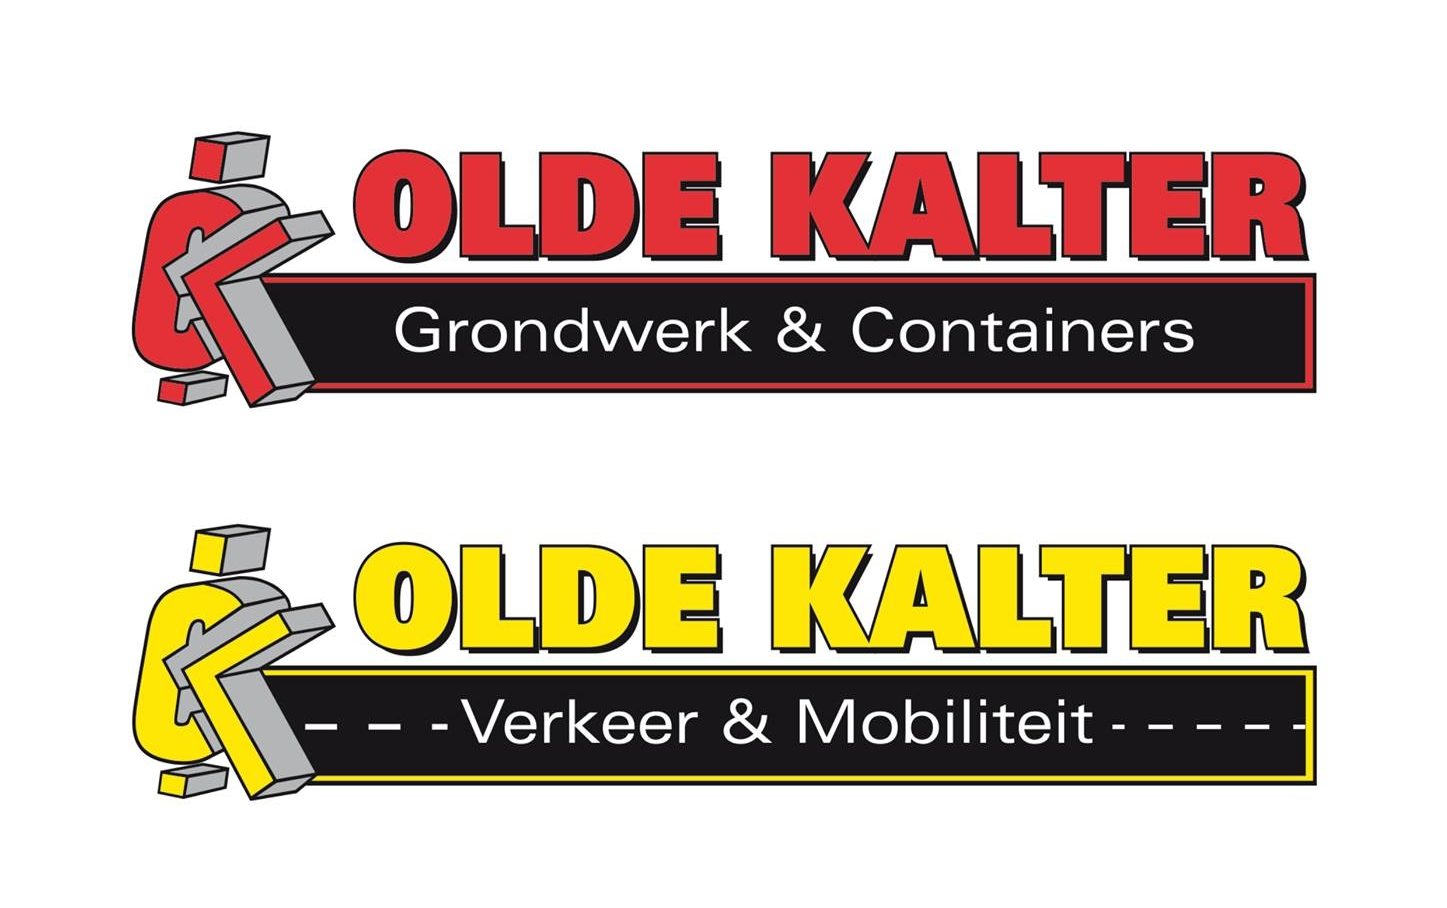 Olde Kalter